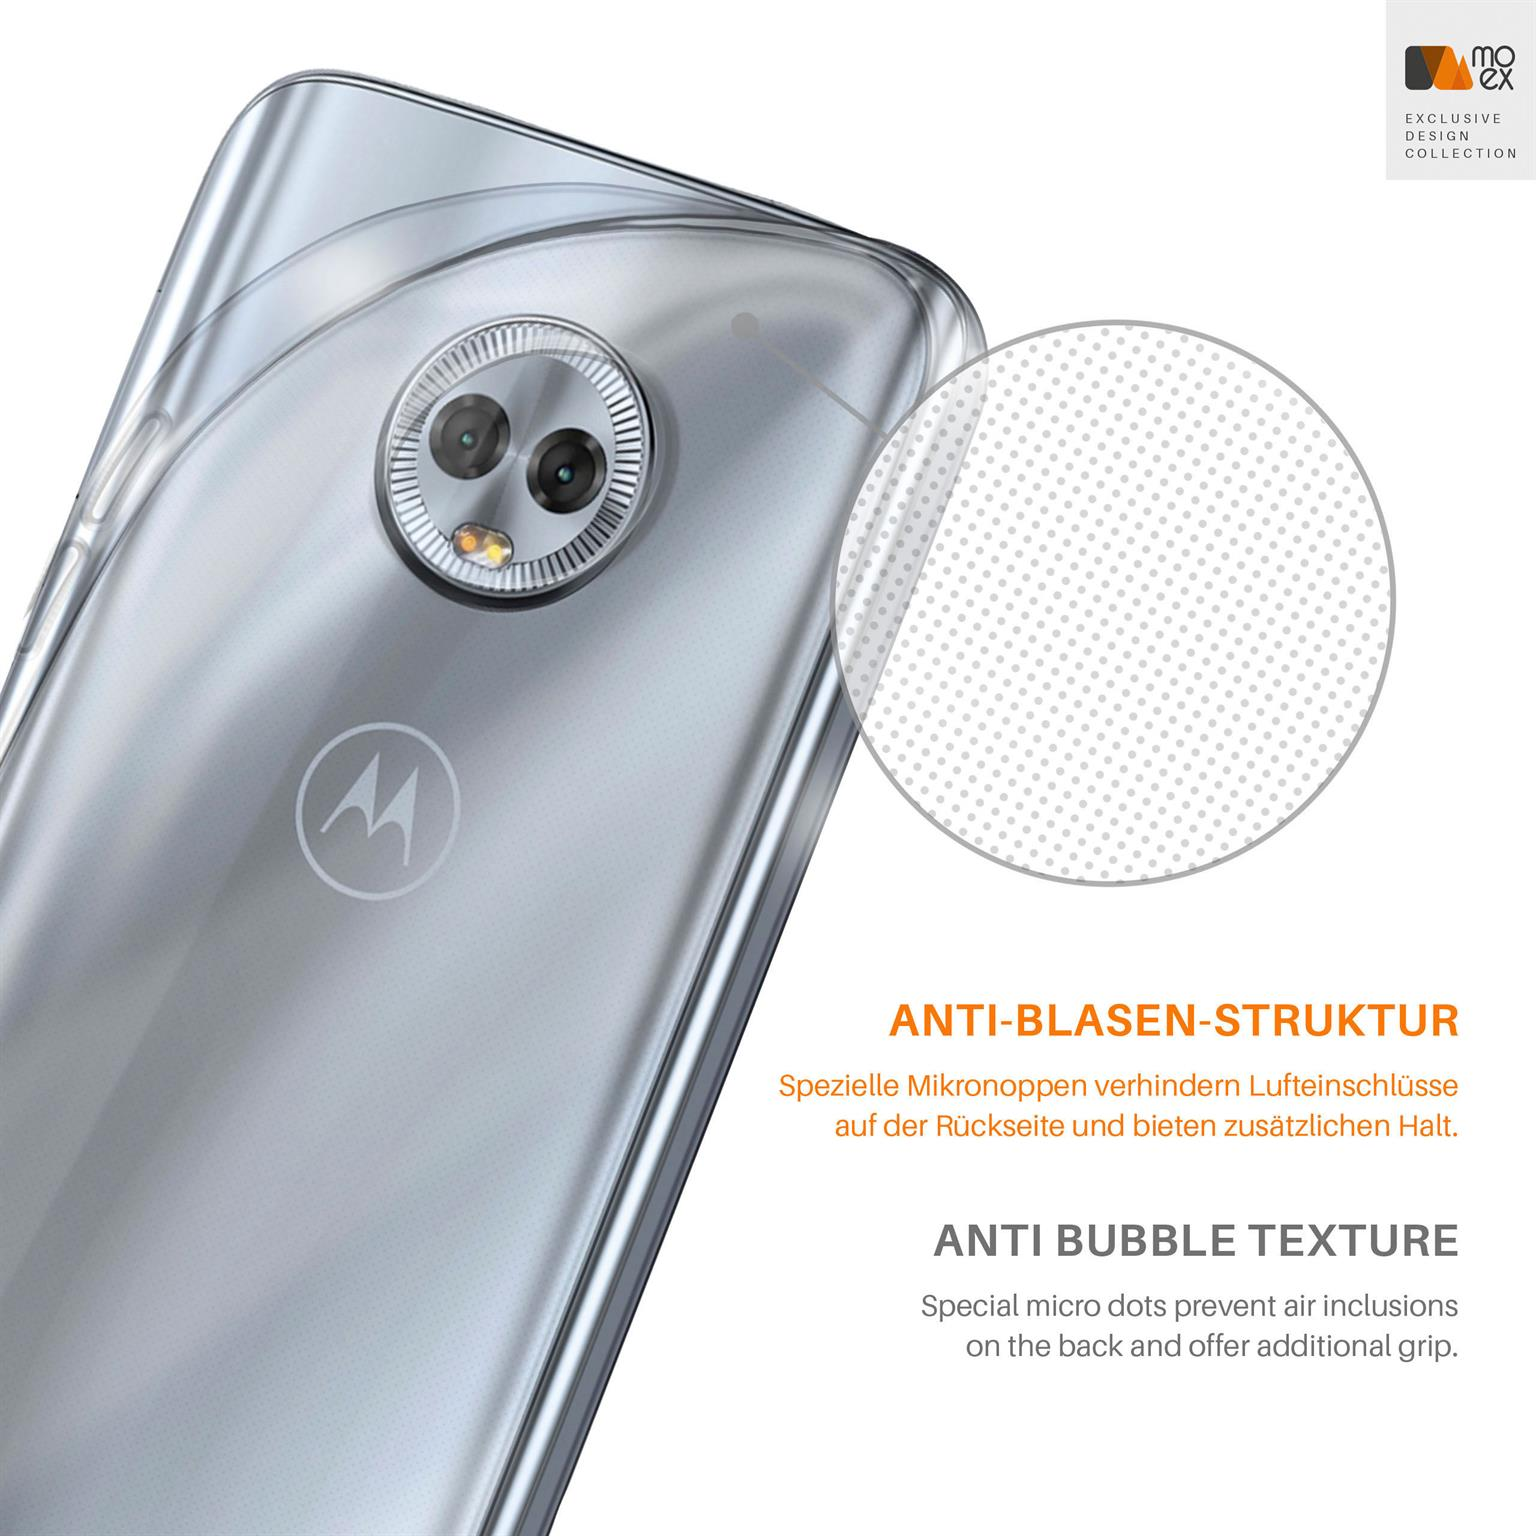 Aero Case, Plus, G6 Backcover, Moto Crystal-Clear MOEX Motorola,